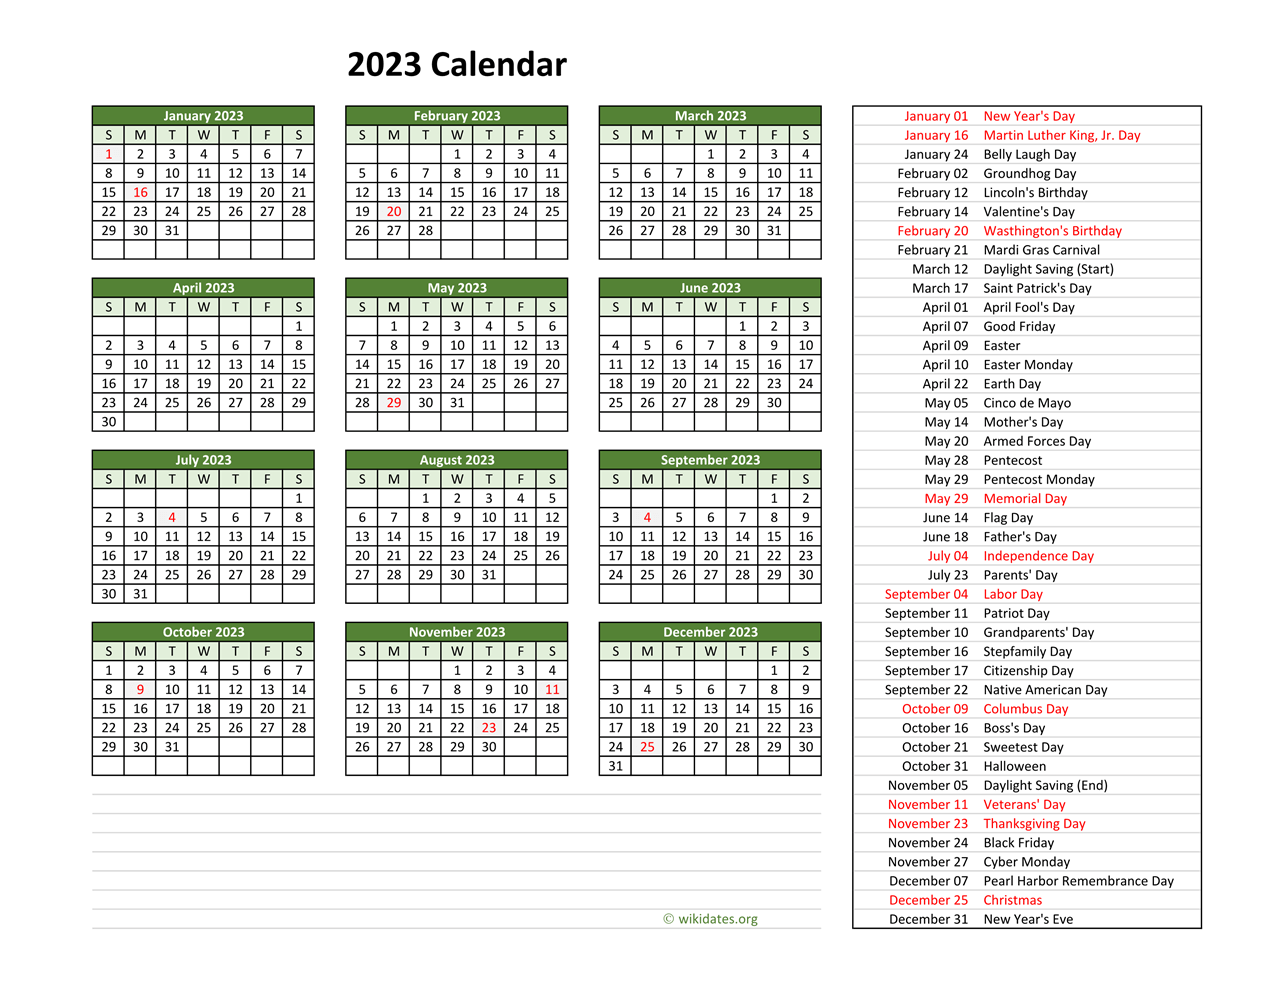 2023 Calendar With US Holidays WikiDates